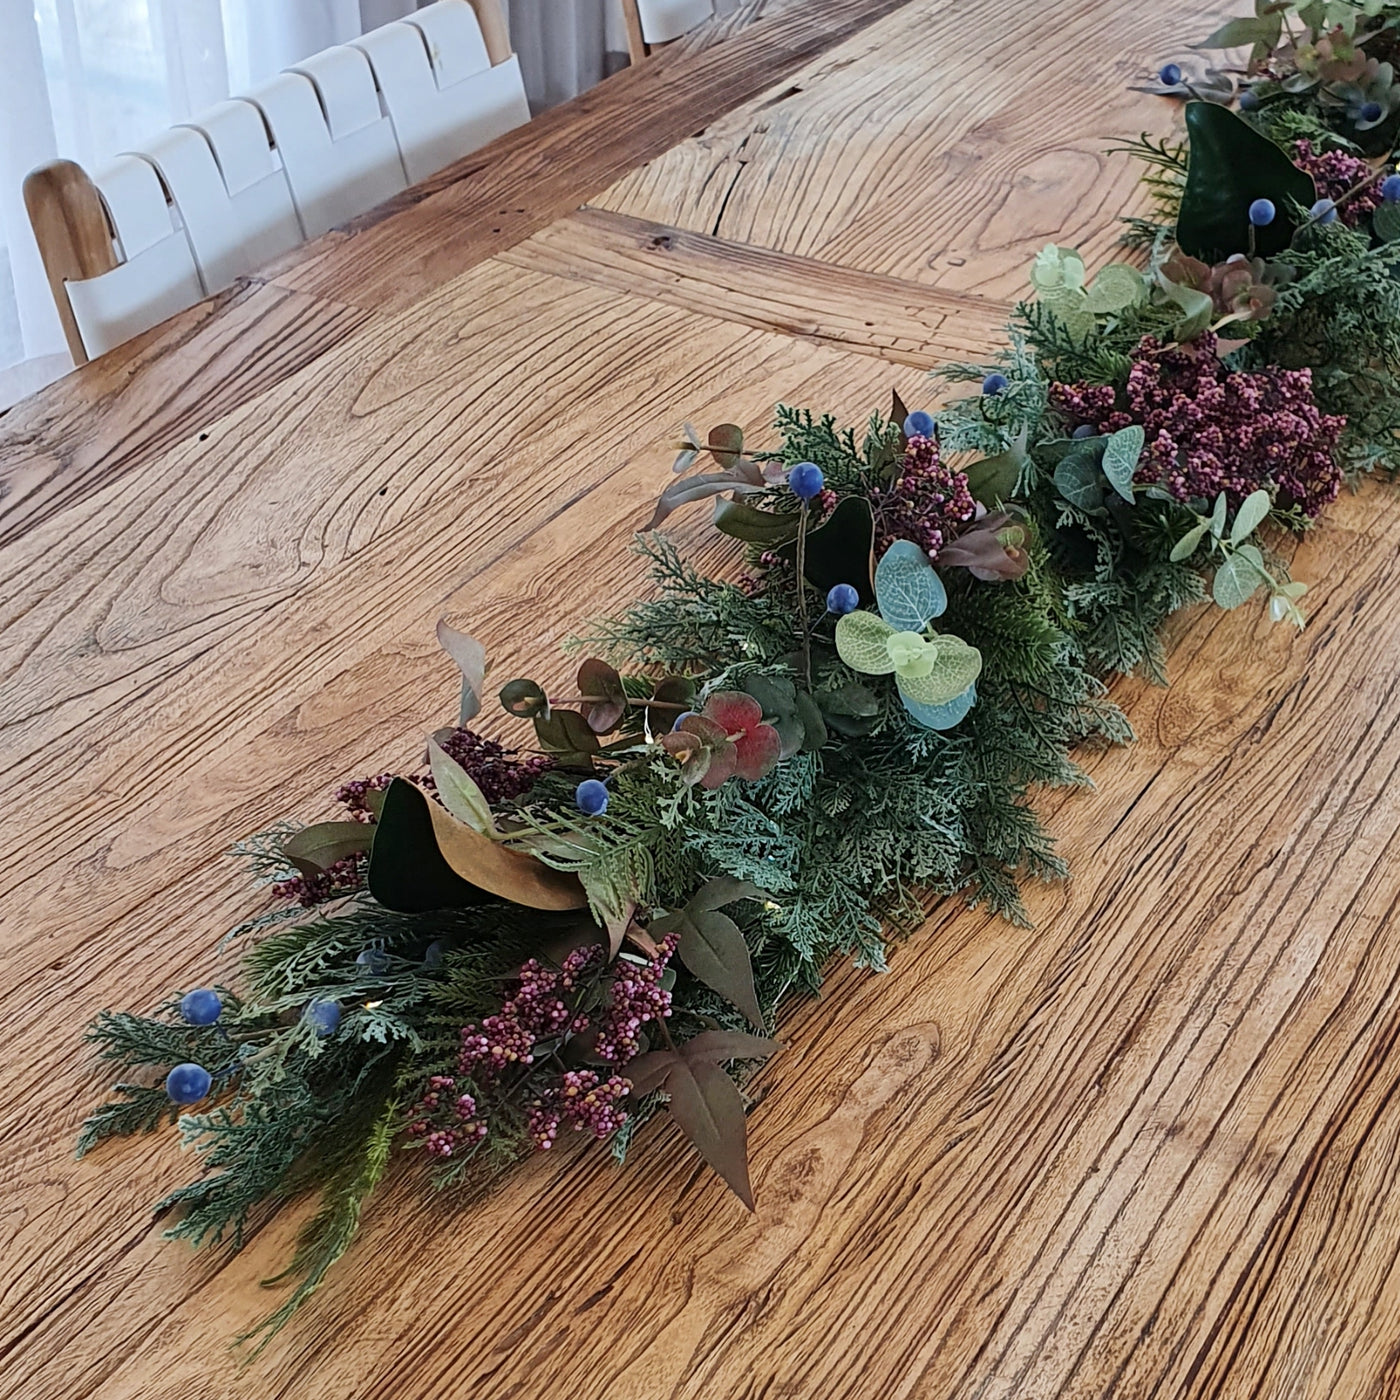 Eucalyptus & Blueberry Christmas Wreath or Garland